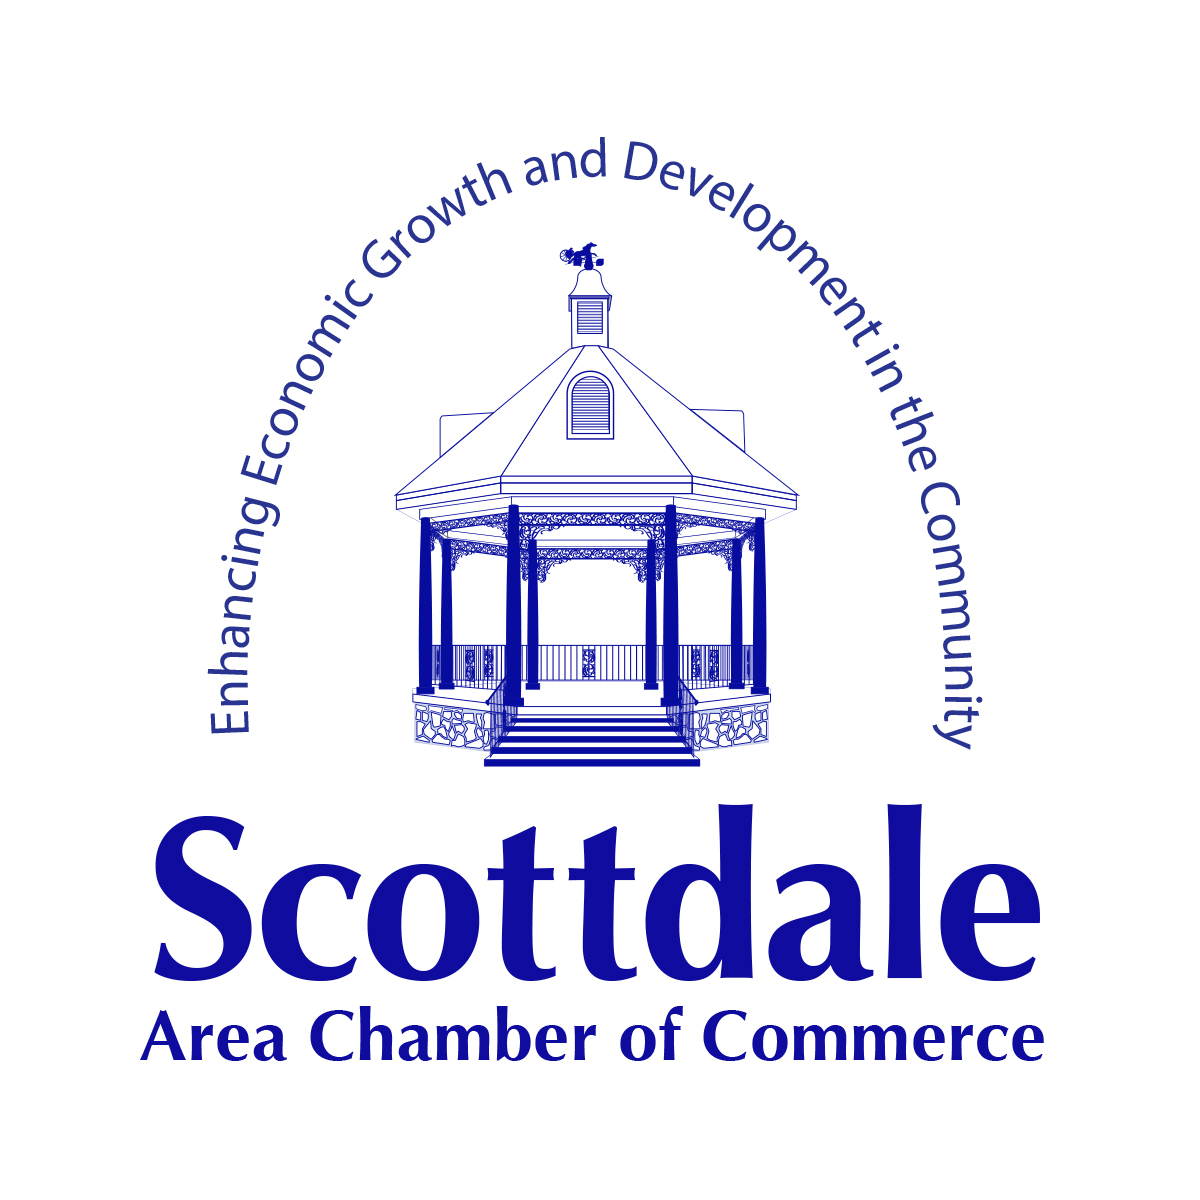 sacc Scottdale Chamber chamber of commerce logo business supplies Gazebo Scottdale Gazebo